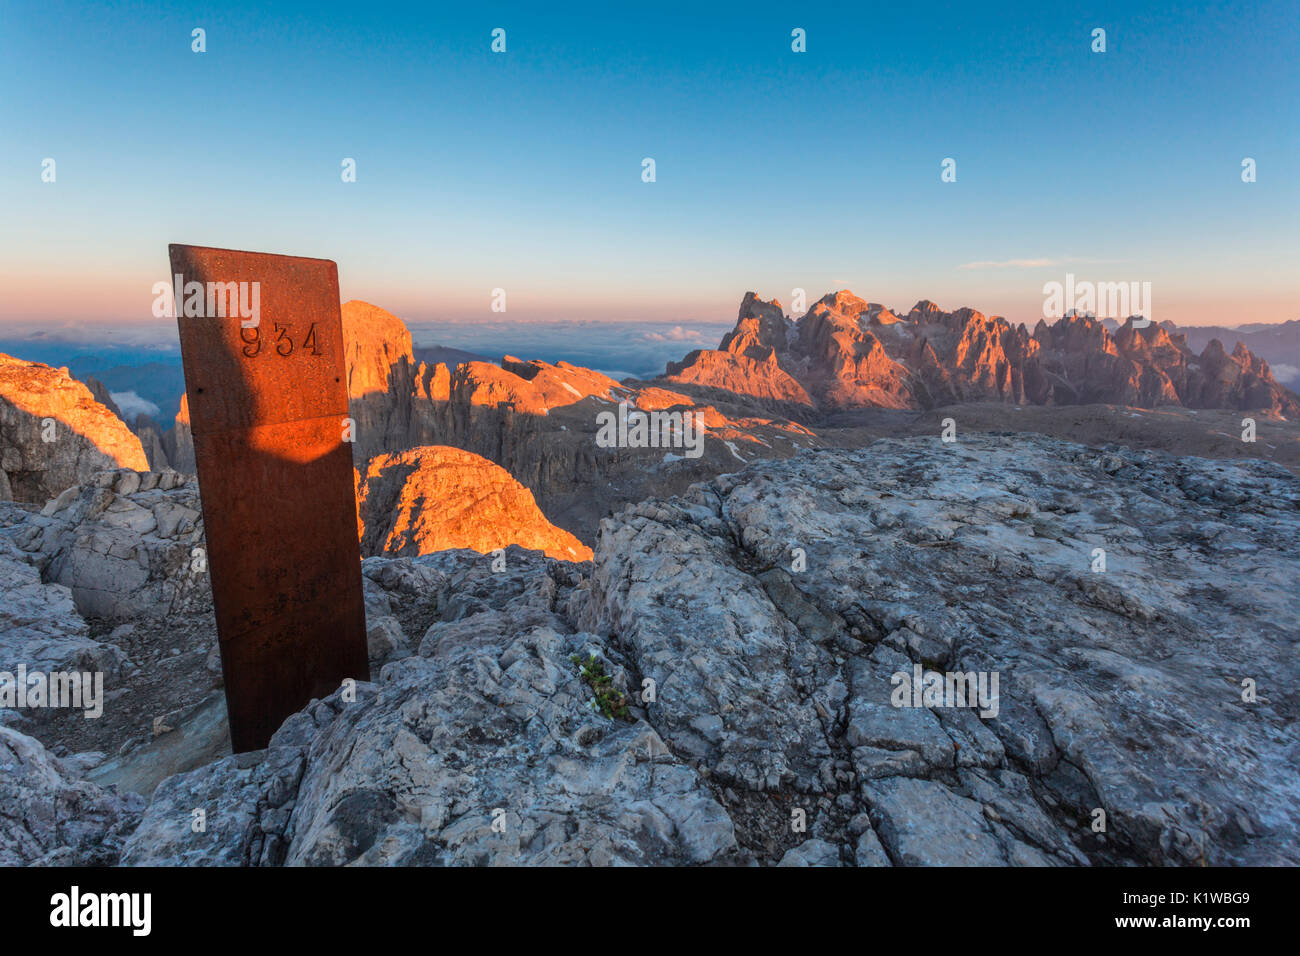 Europe, Italy, Trentino, Trento. Sunrise from the summit of Fradusta, Pale di San Martino, Dolomites Stock Photo